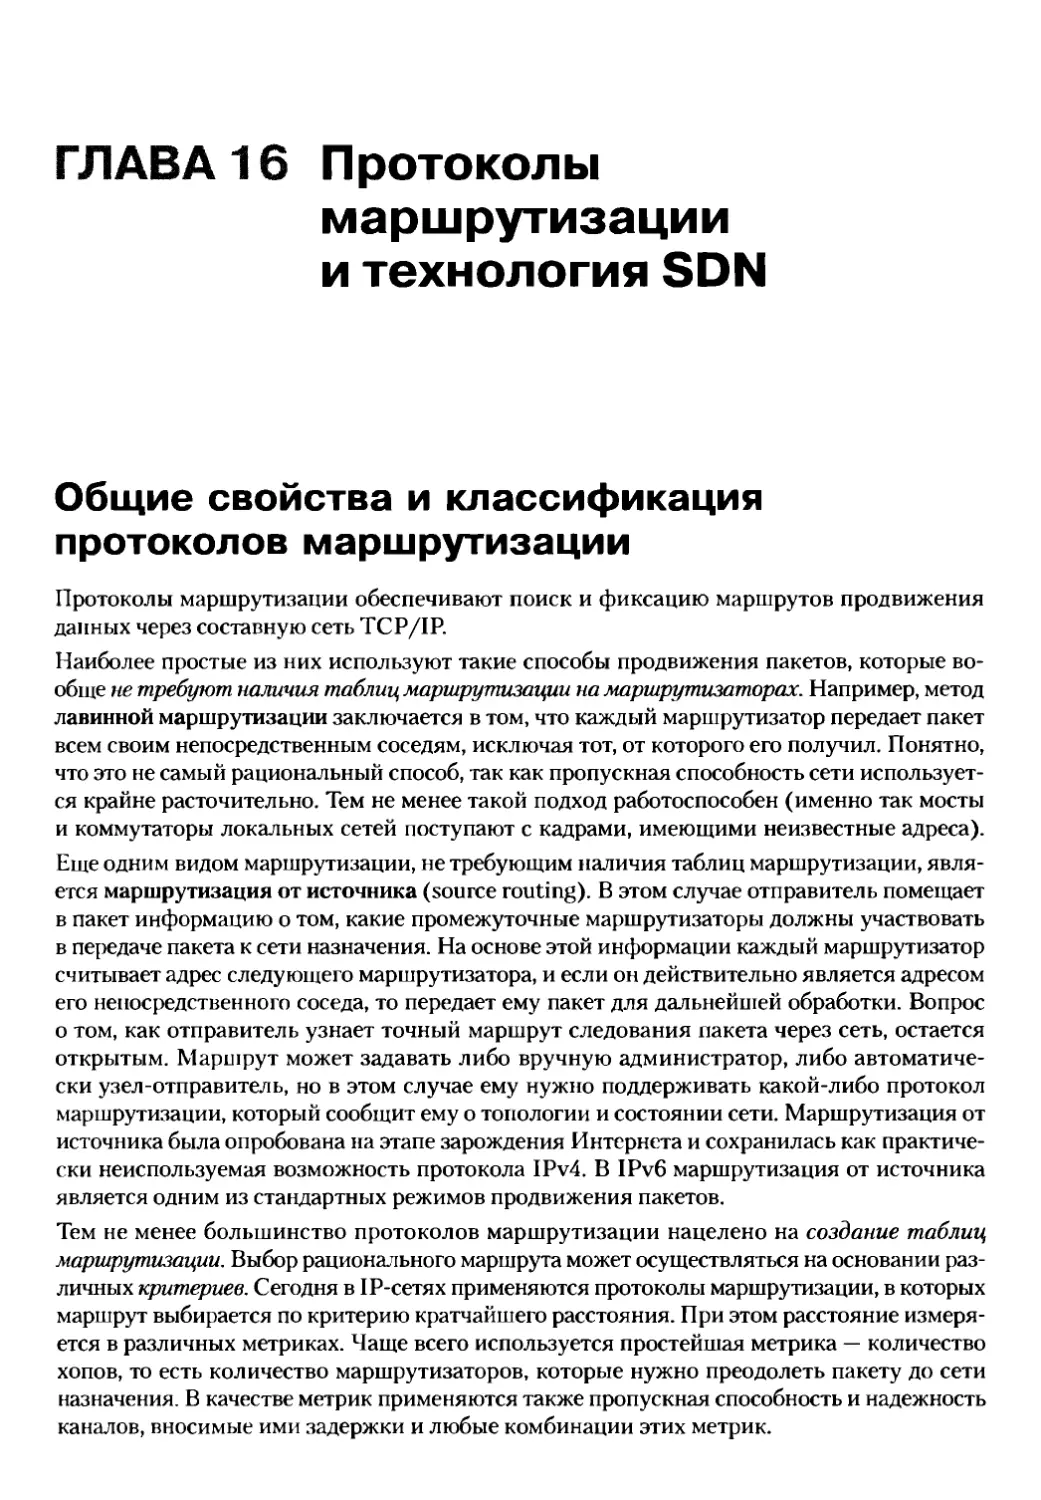 16. Протоколы маршрутизации и технология SDN